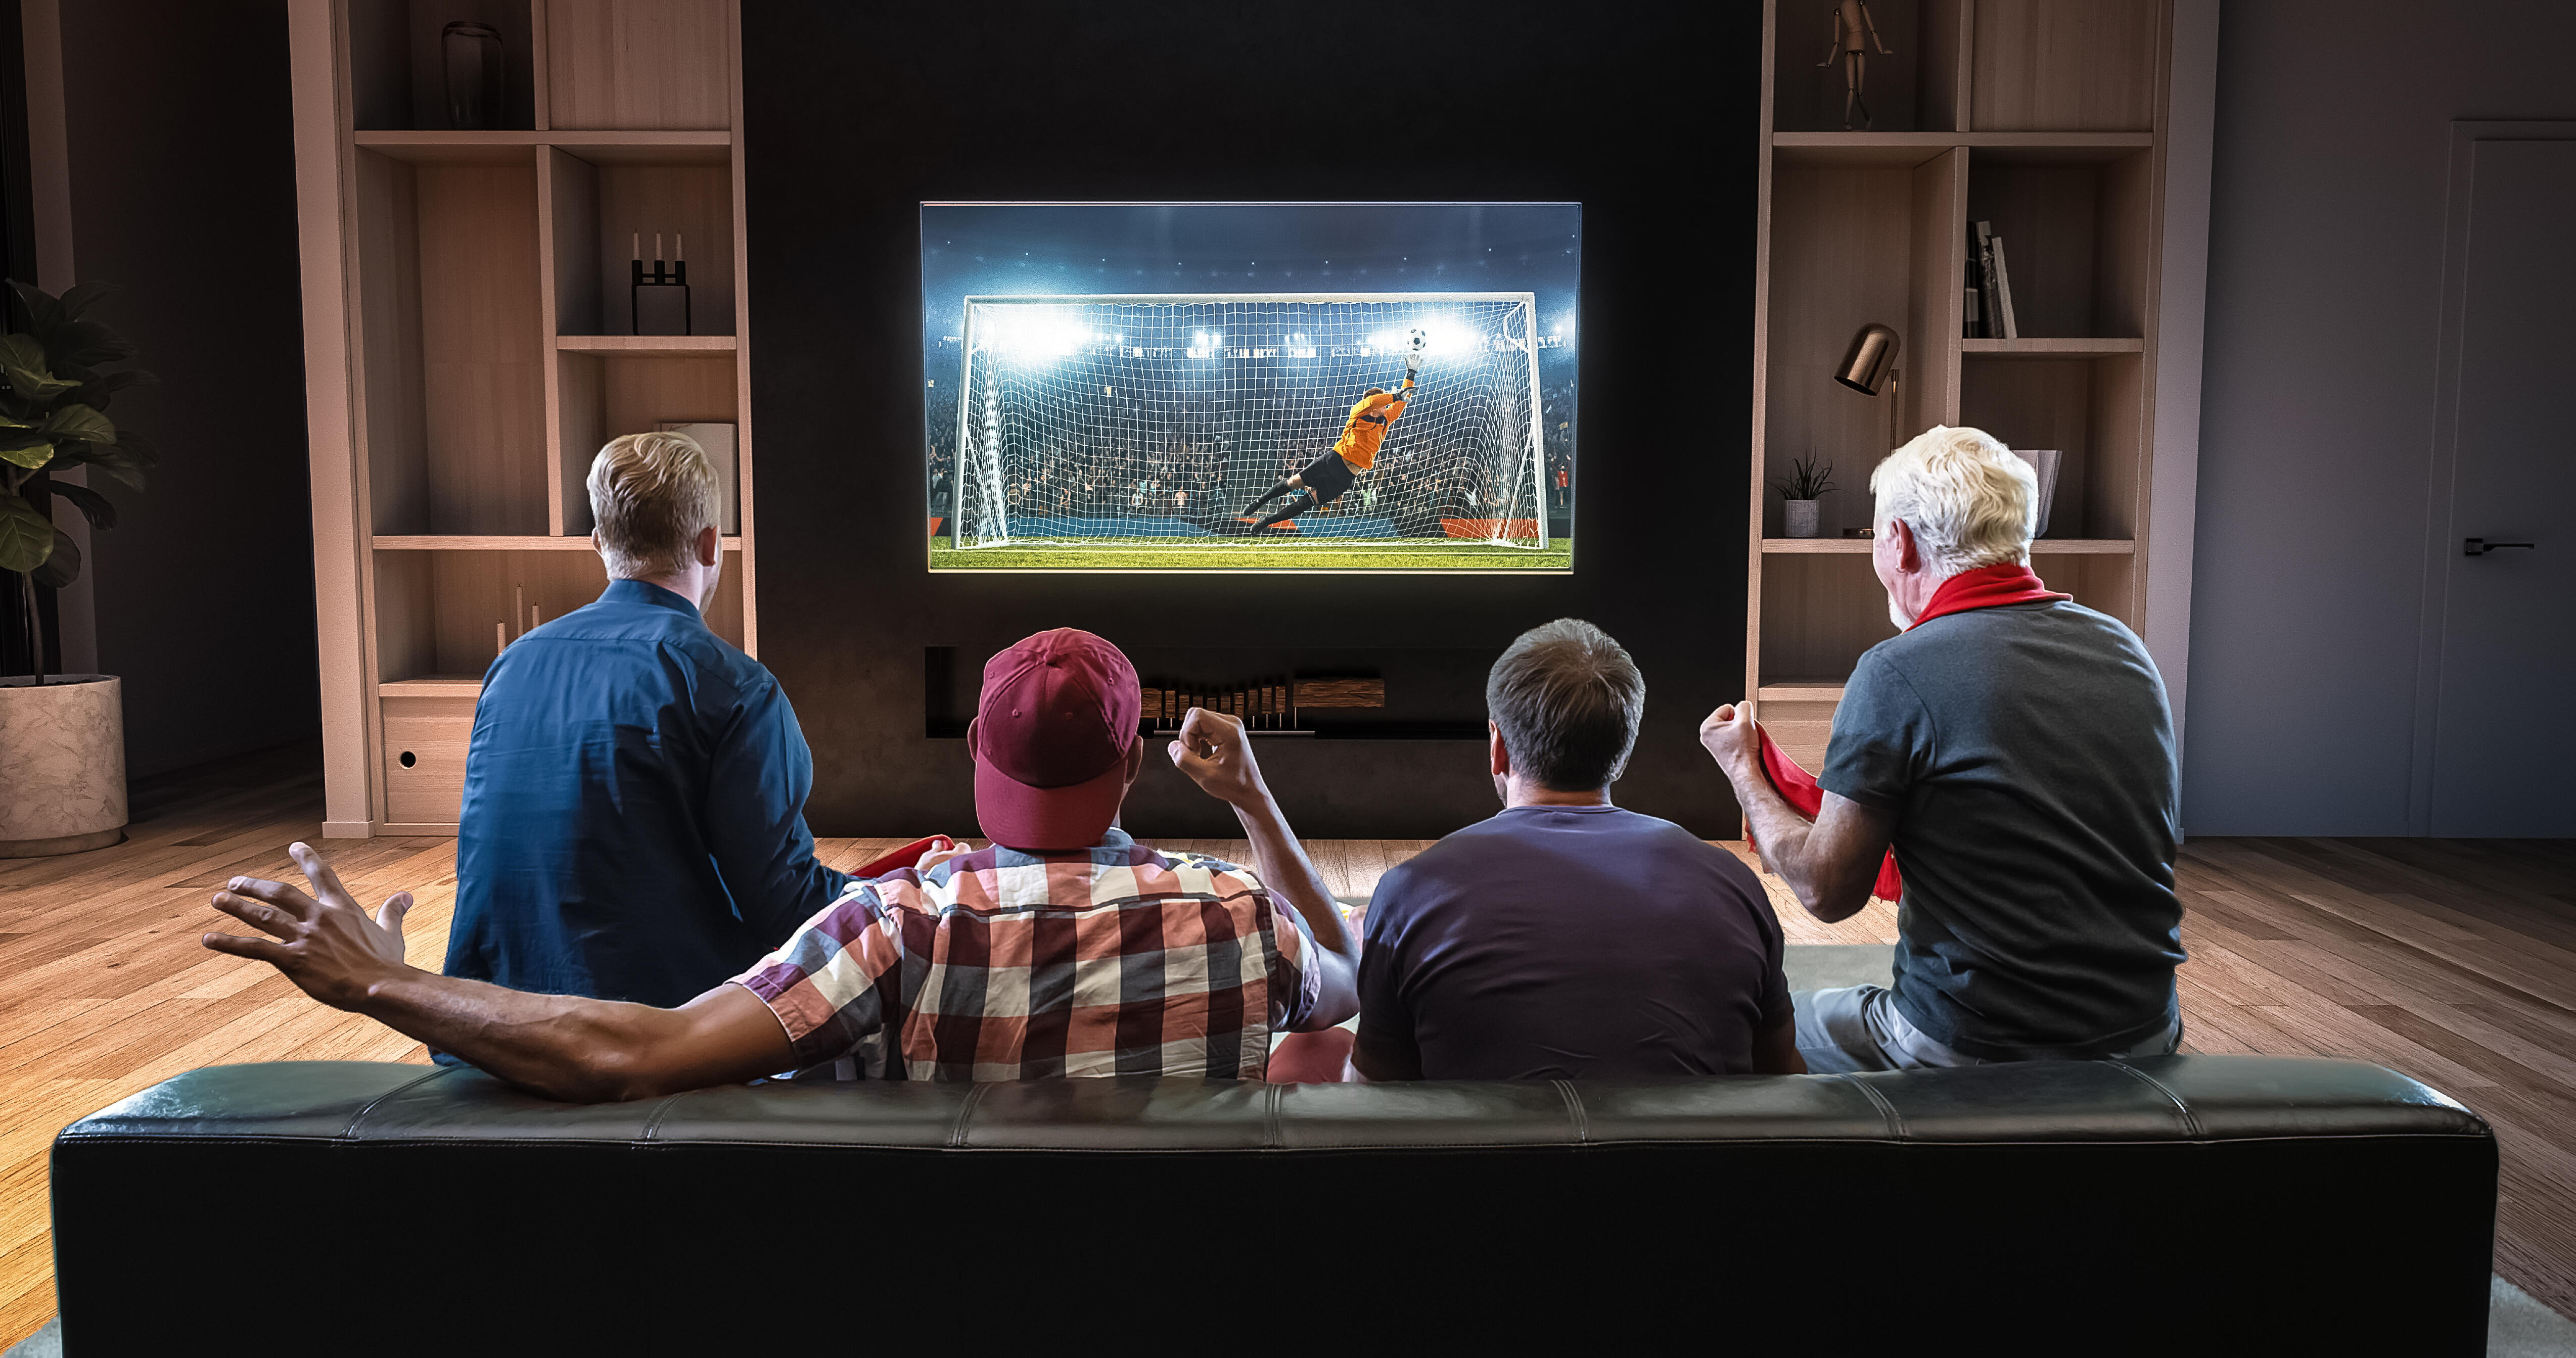 They to watch a new. Футбол по телевизору. Болельщики у телевизора. Человек перед телевизором. Люди смотрят футбол по телевизору.